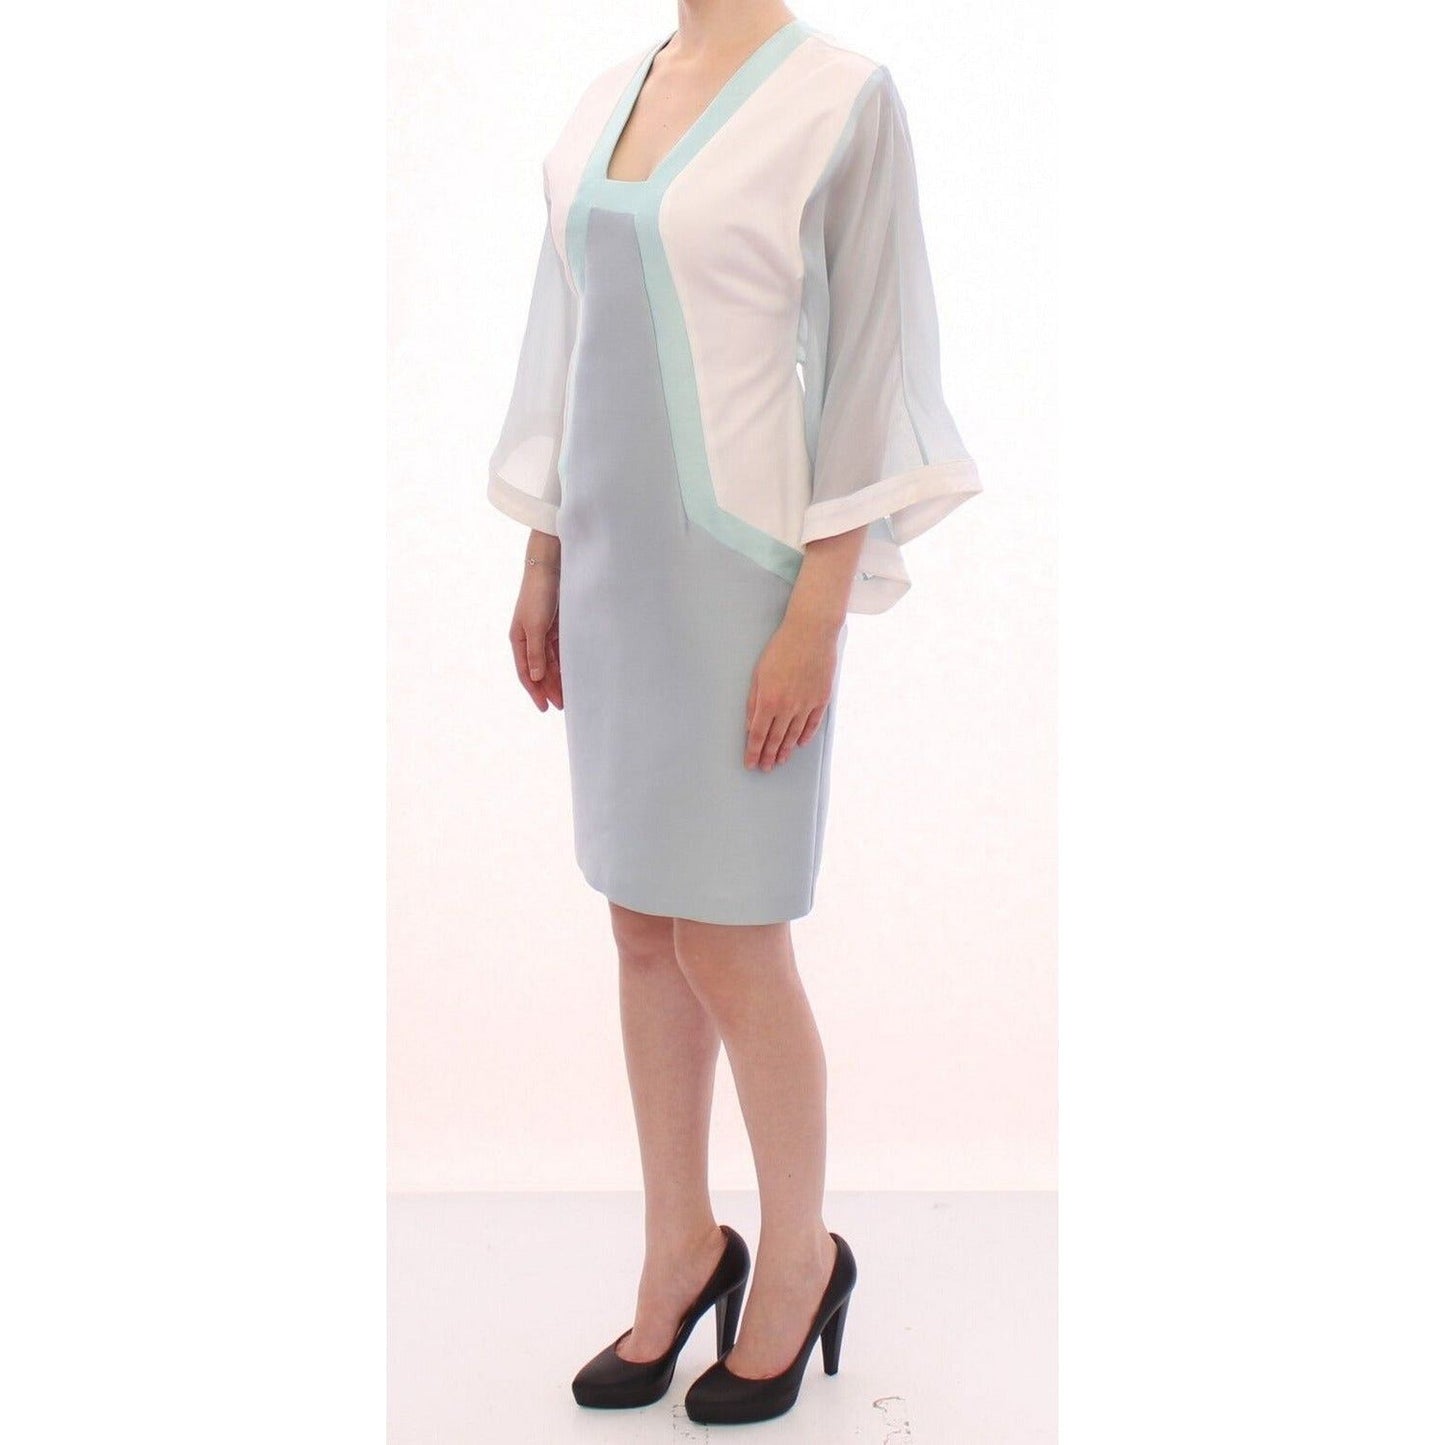 Sergei Grinko Elegant Turquoise Silk Sheath Dress WOMAN DRESSES white-silk-sheath-formal-turquoise-dress s-l1600-27-2-664beb0d-42f.jpg